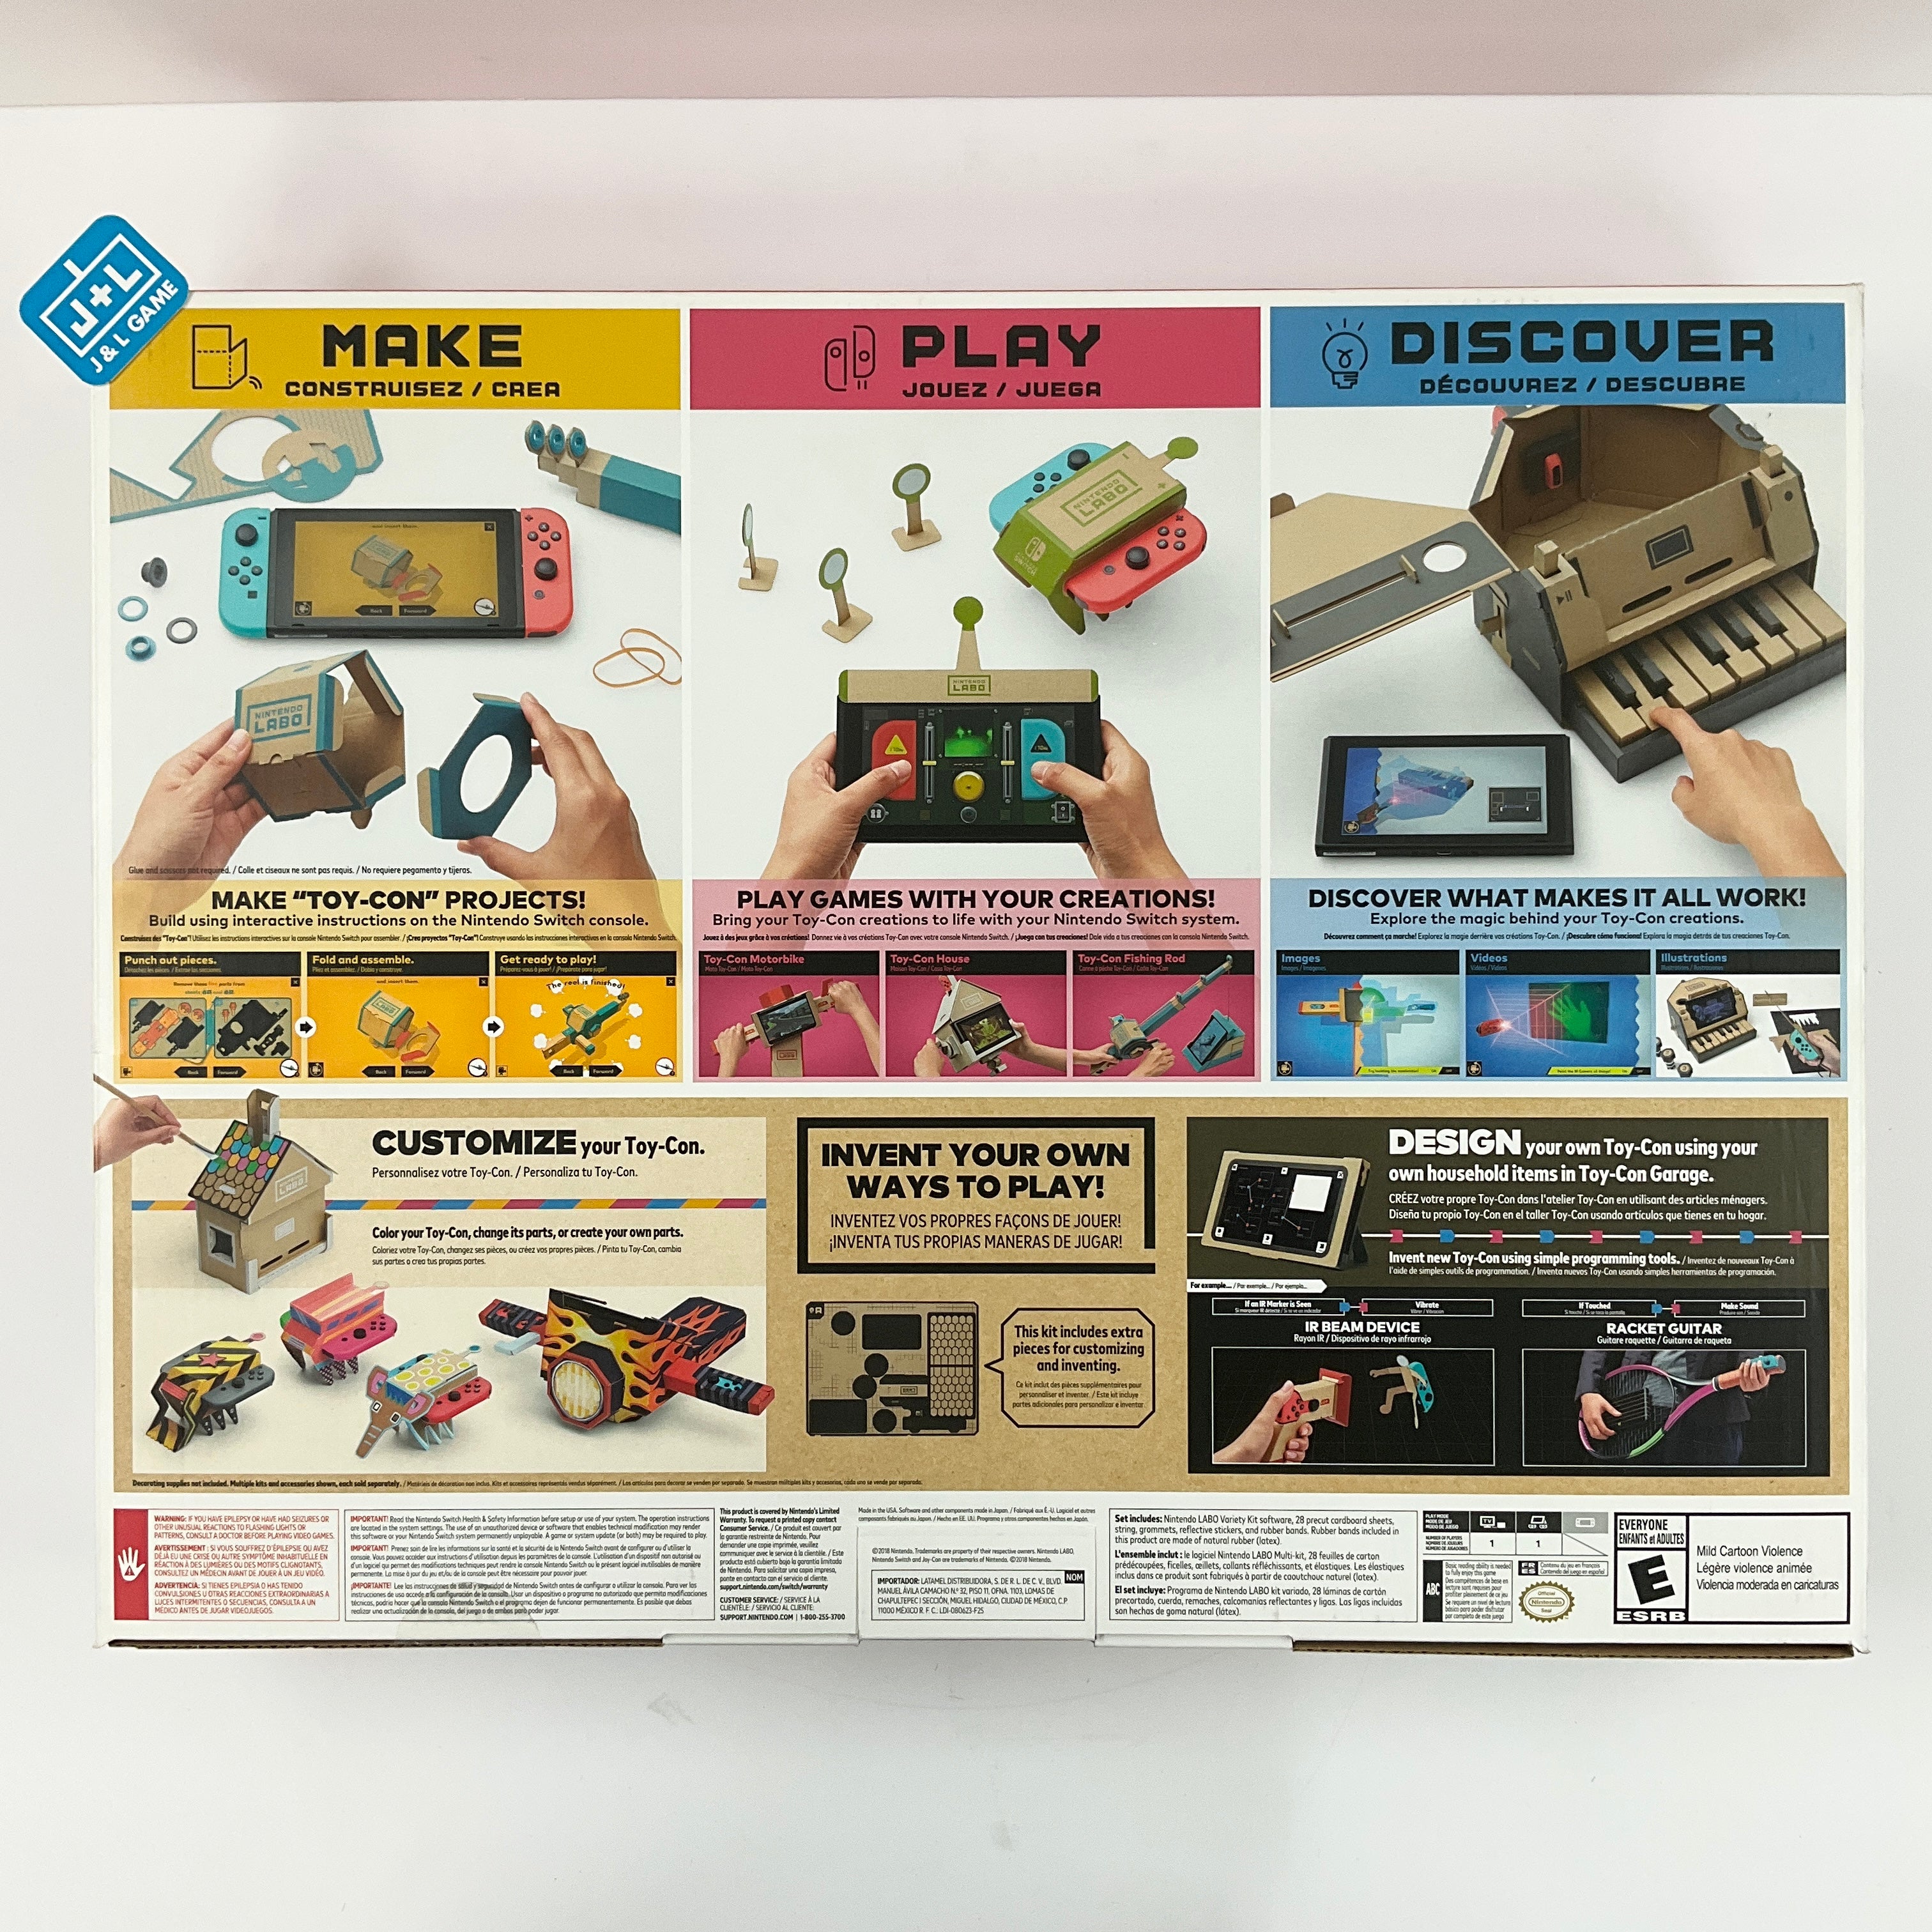 Nintendo Switch Labo Toy-Con Variety Kit